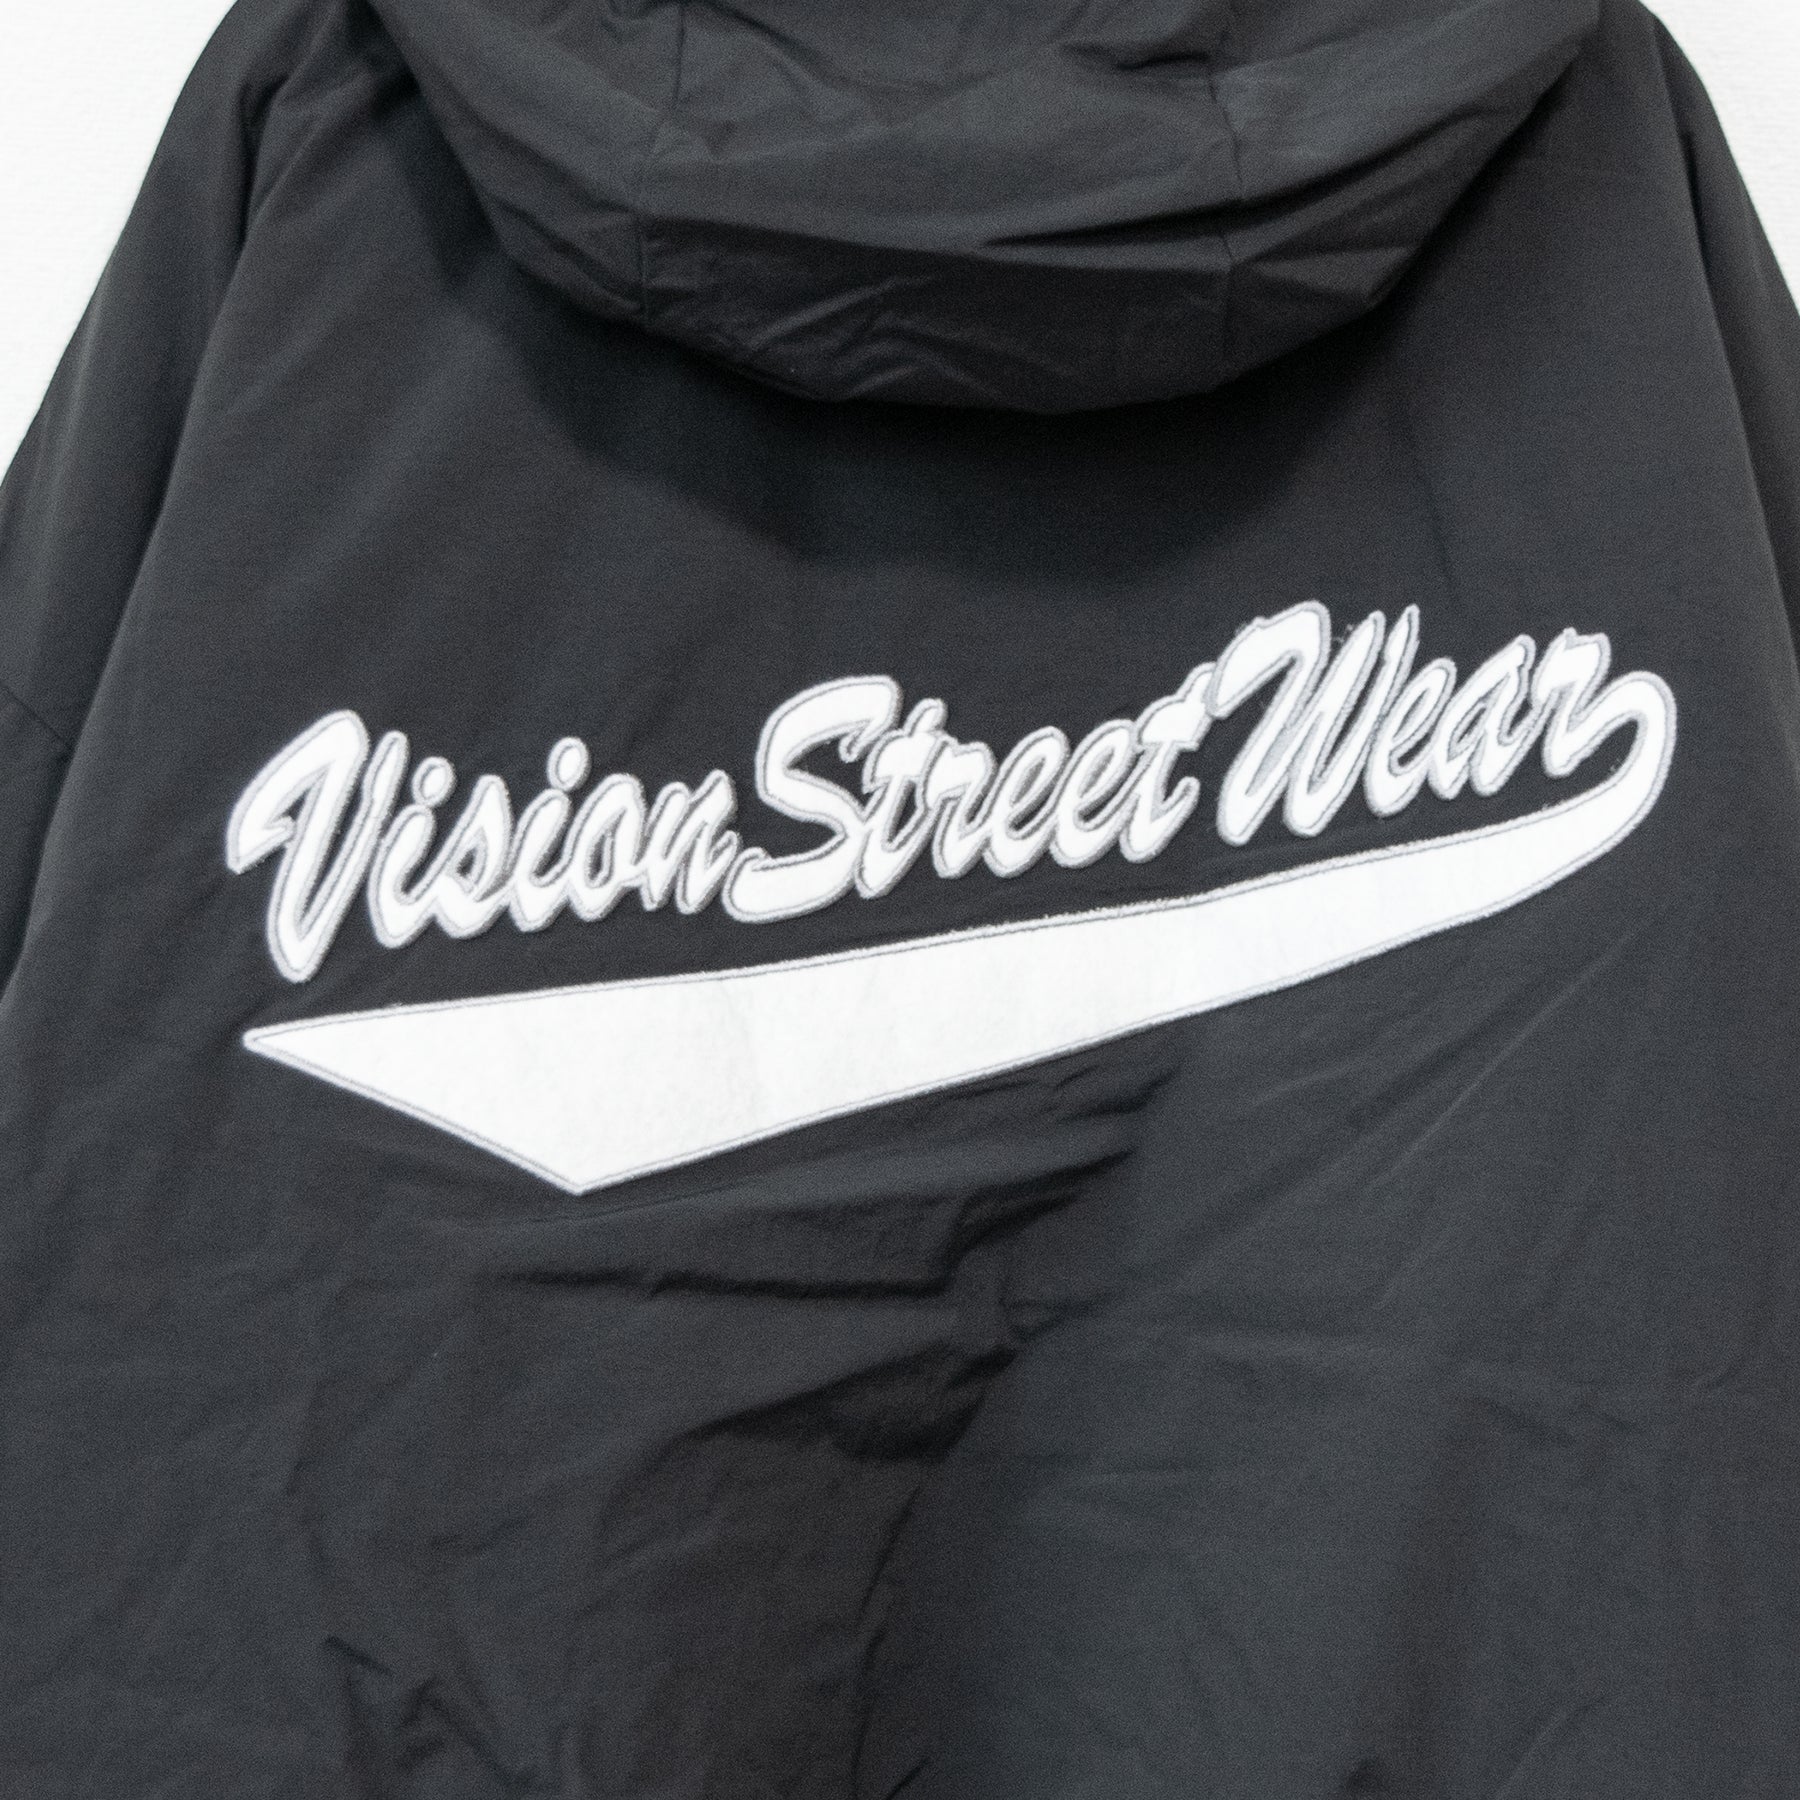 VISION STREET WEAR Cotton Padding Jacket - YOUAREMYPOISON